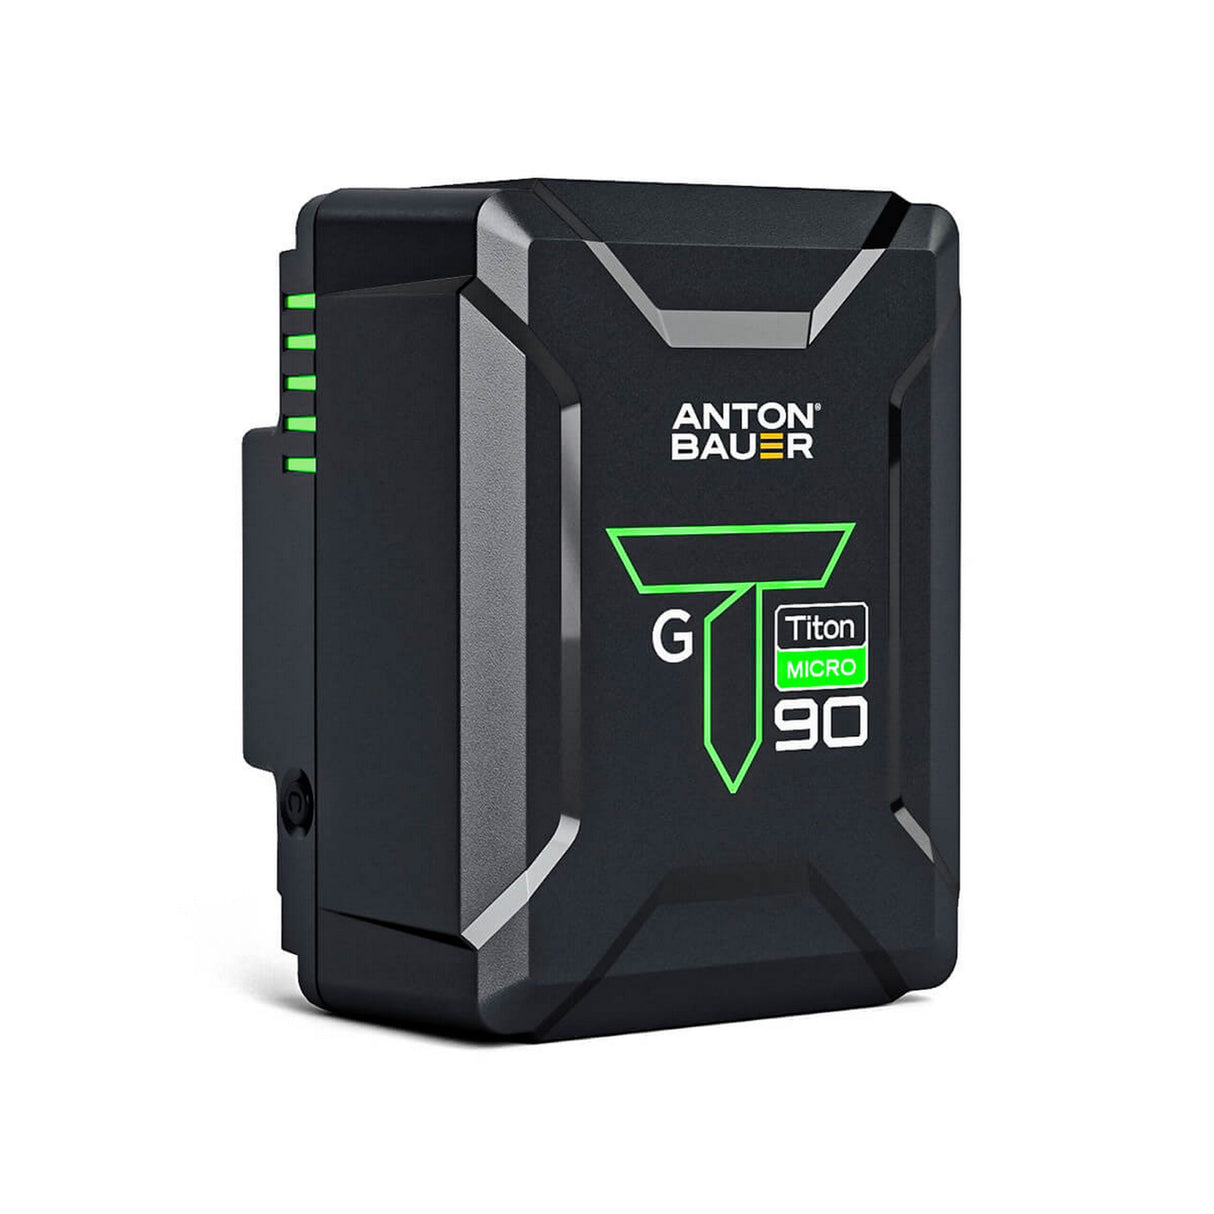 Anton Bauer 8675-0164 Titon Micro 90 Lithium-Ion Gold Mount Battery